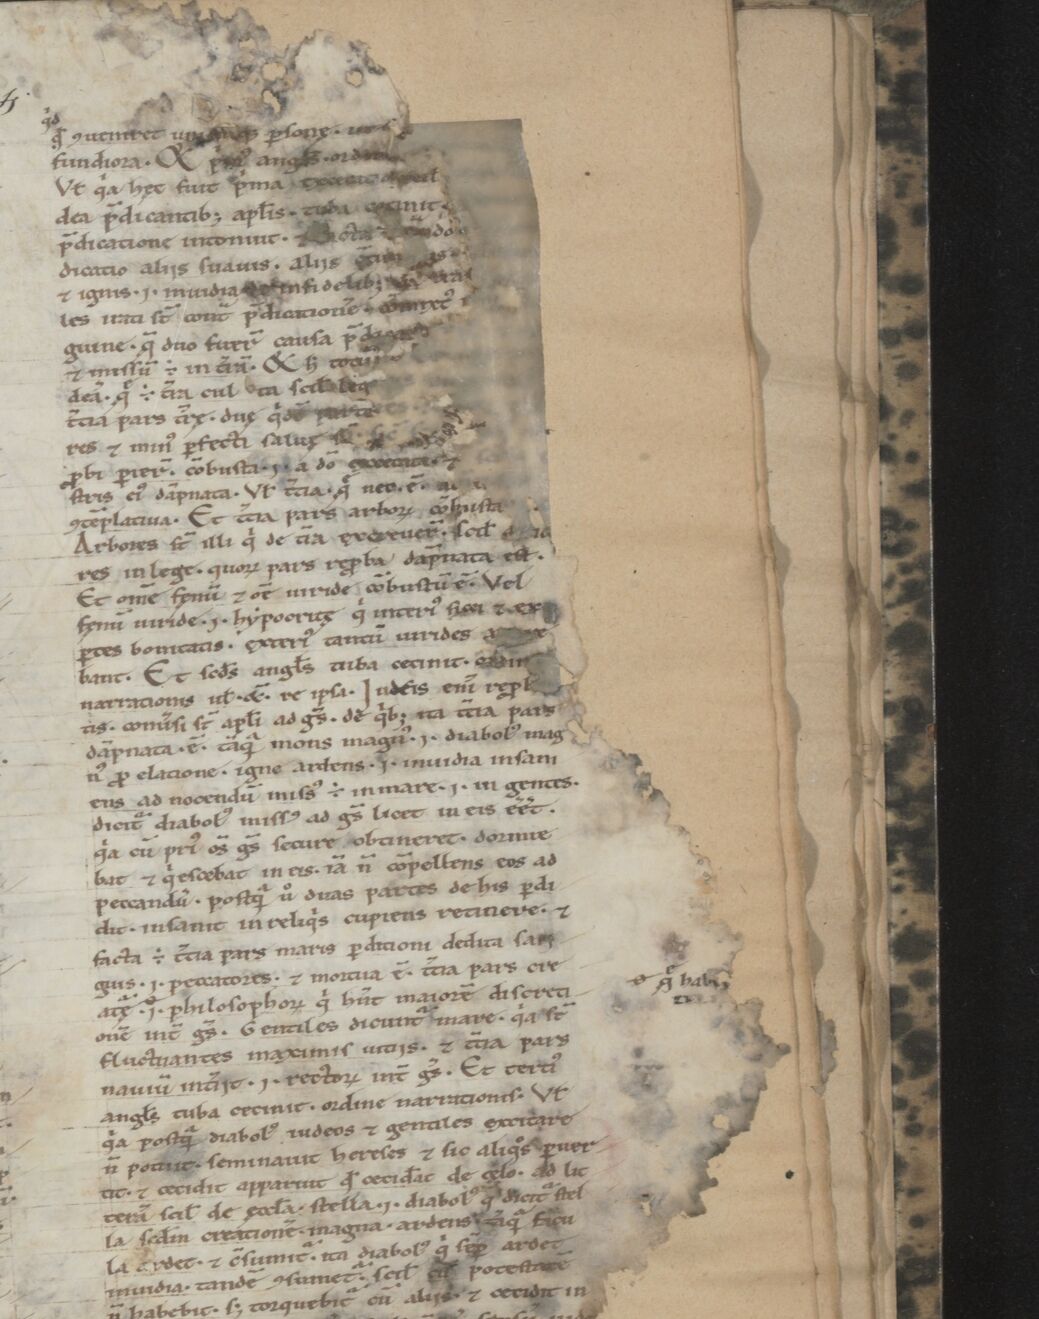 Ivo Carnotensis, Commentarius in Psalmos (1-129).